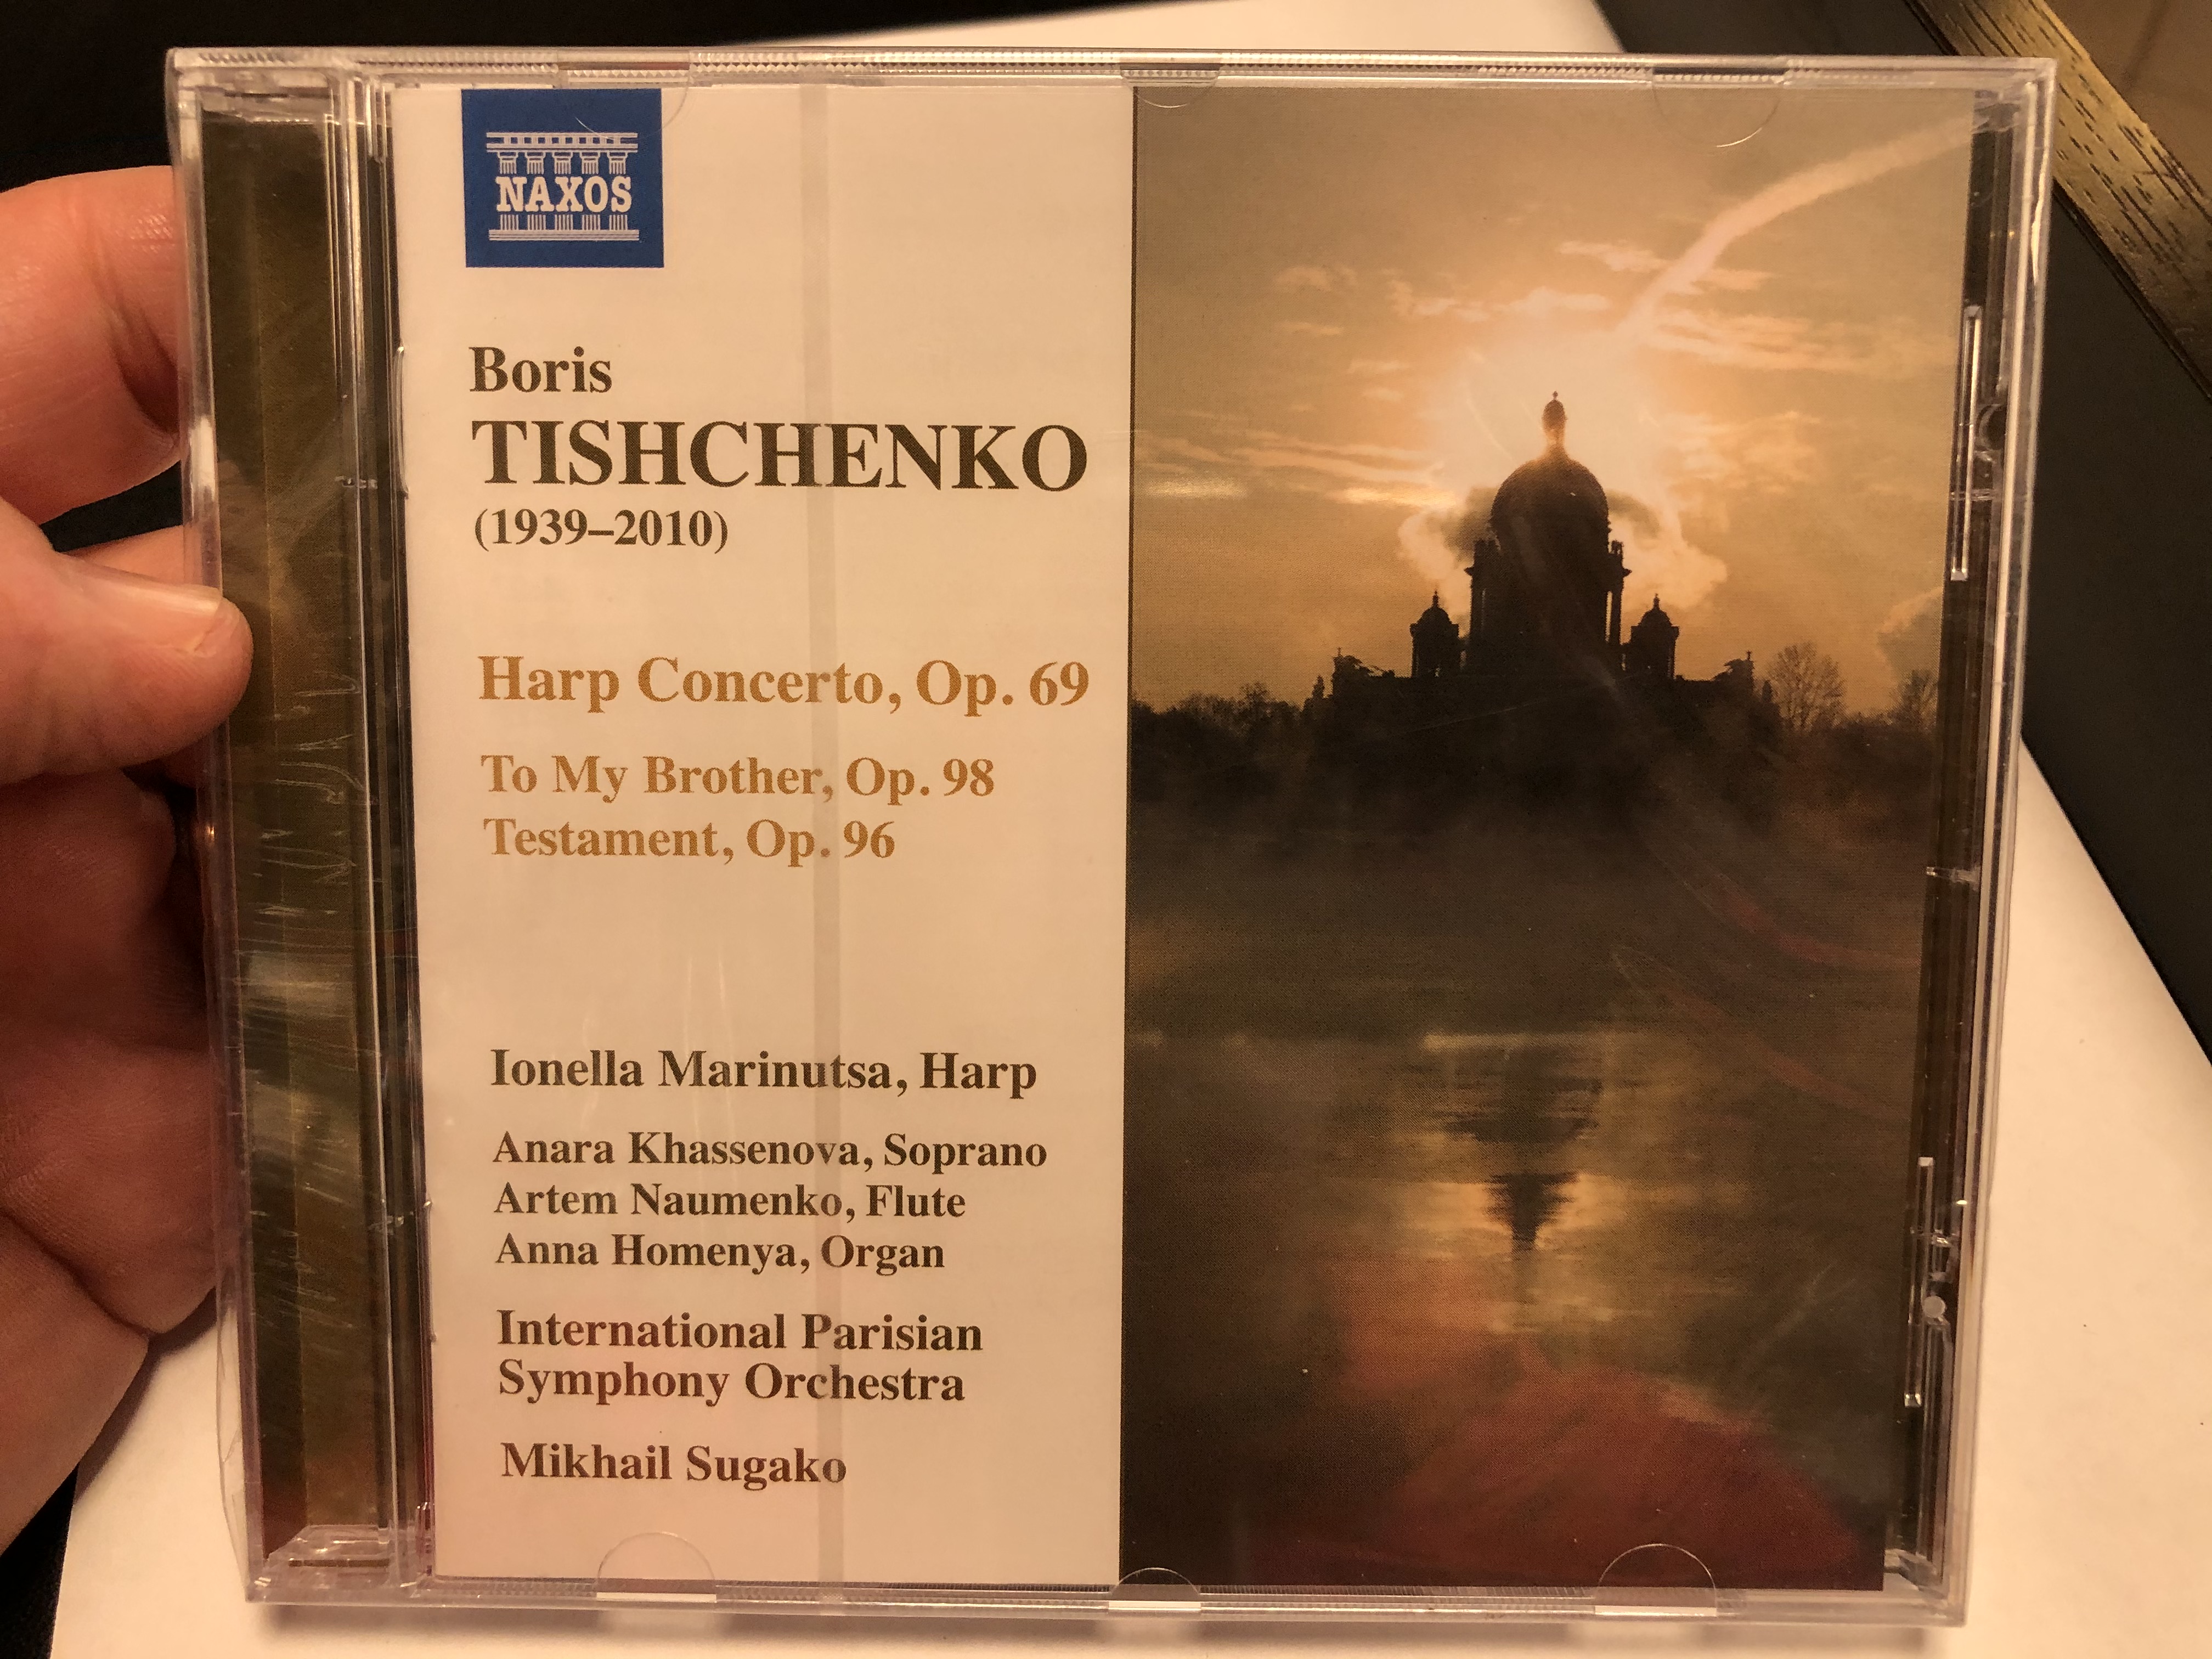 boris-tishchenko-1939-2010-harp-concerto-op.-69-to-my-brother-op.-98-testament-op.-96-ionella-marinutsa-harp-anara-khassenova-soprano-artem-naumenko-flute-anna-homenya-org-1-.jpg